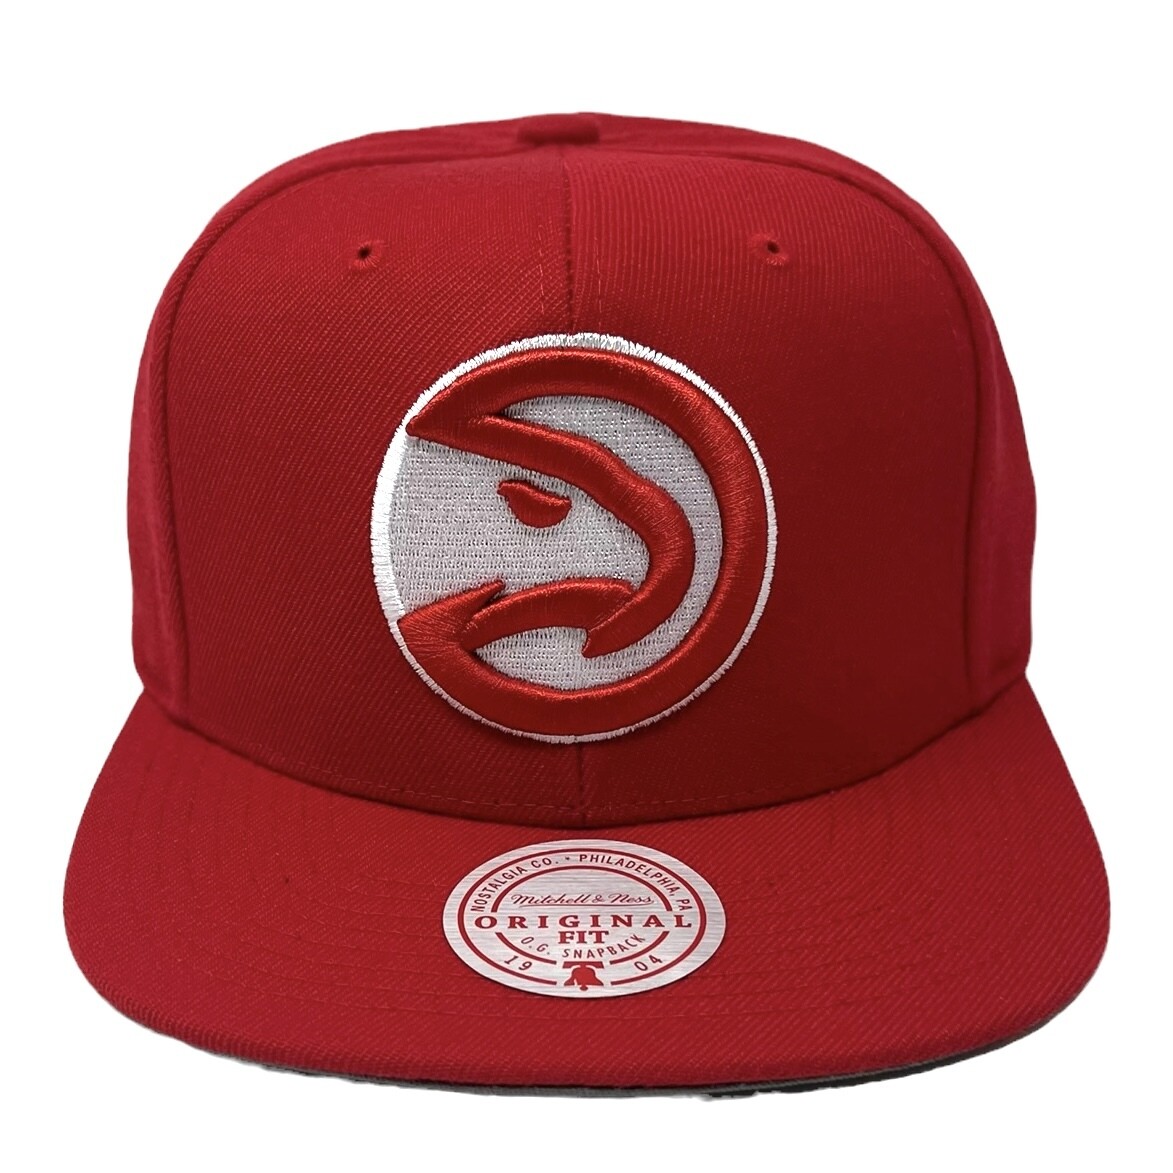 Atlanta Hawks Hats in Atlanta Hawks Team Shop 